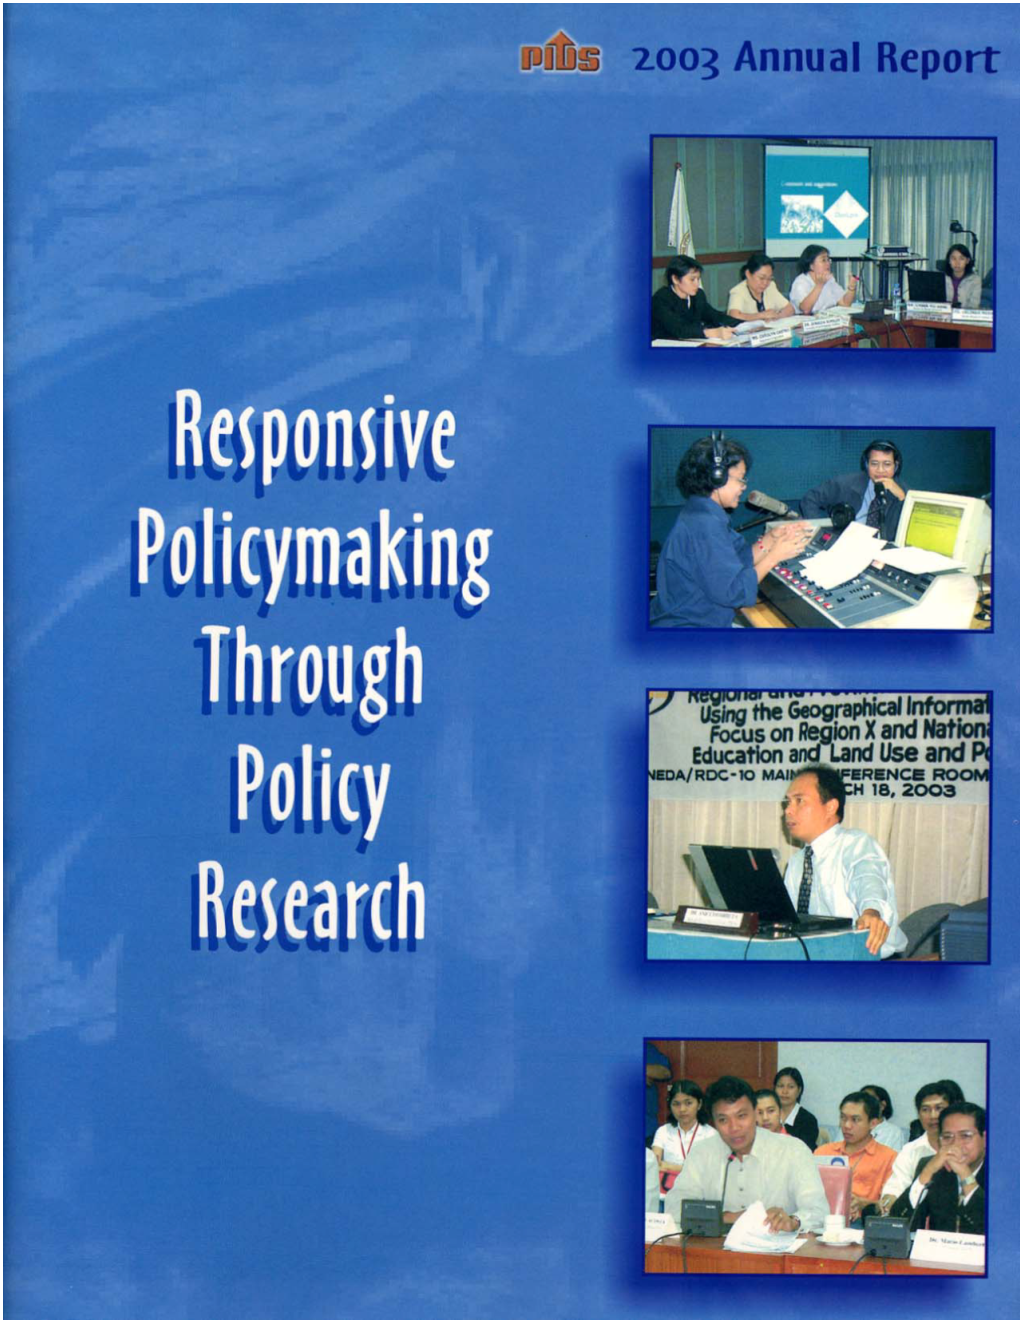 PIDS Annual Report 2003